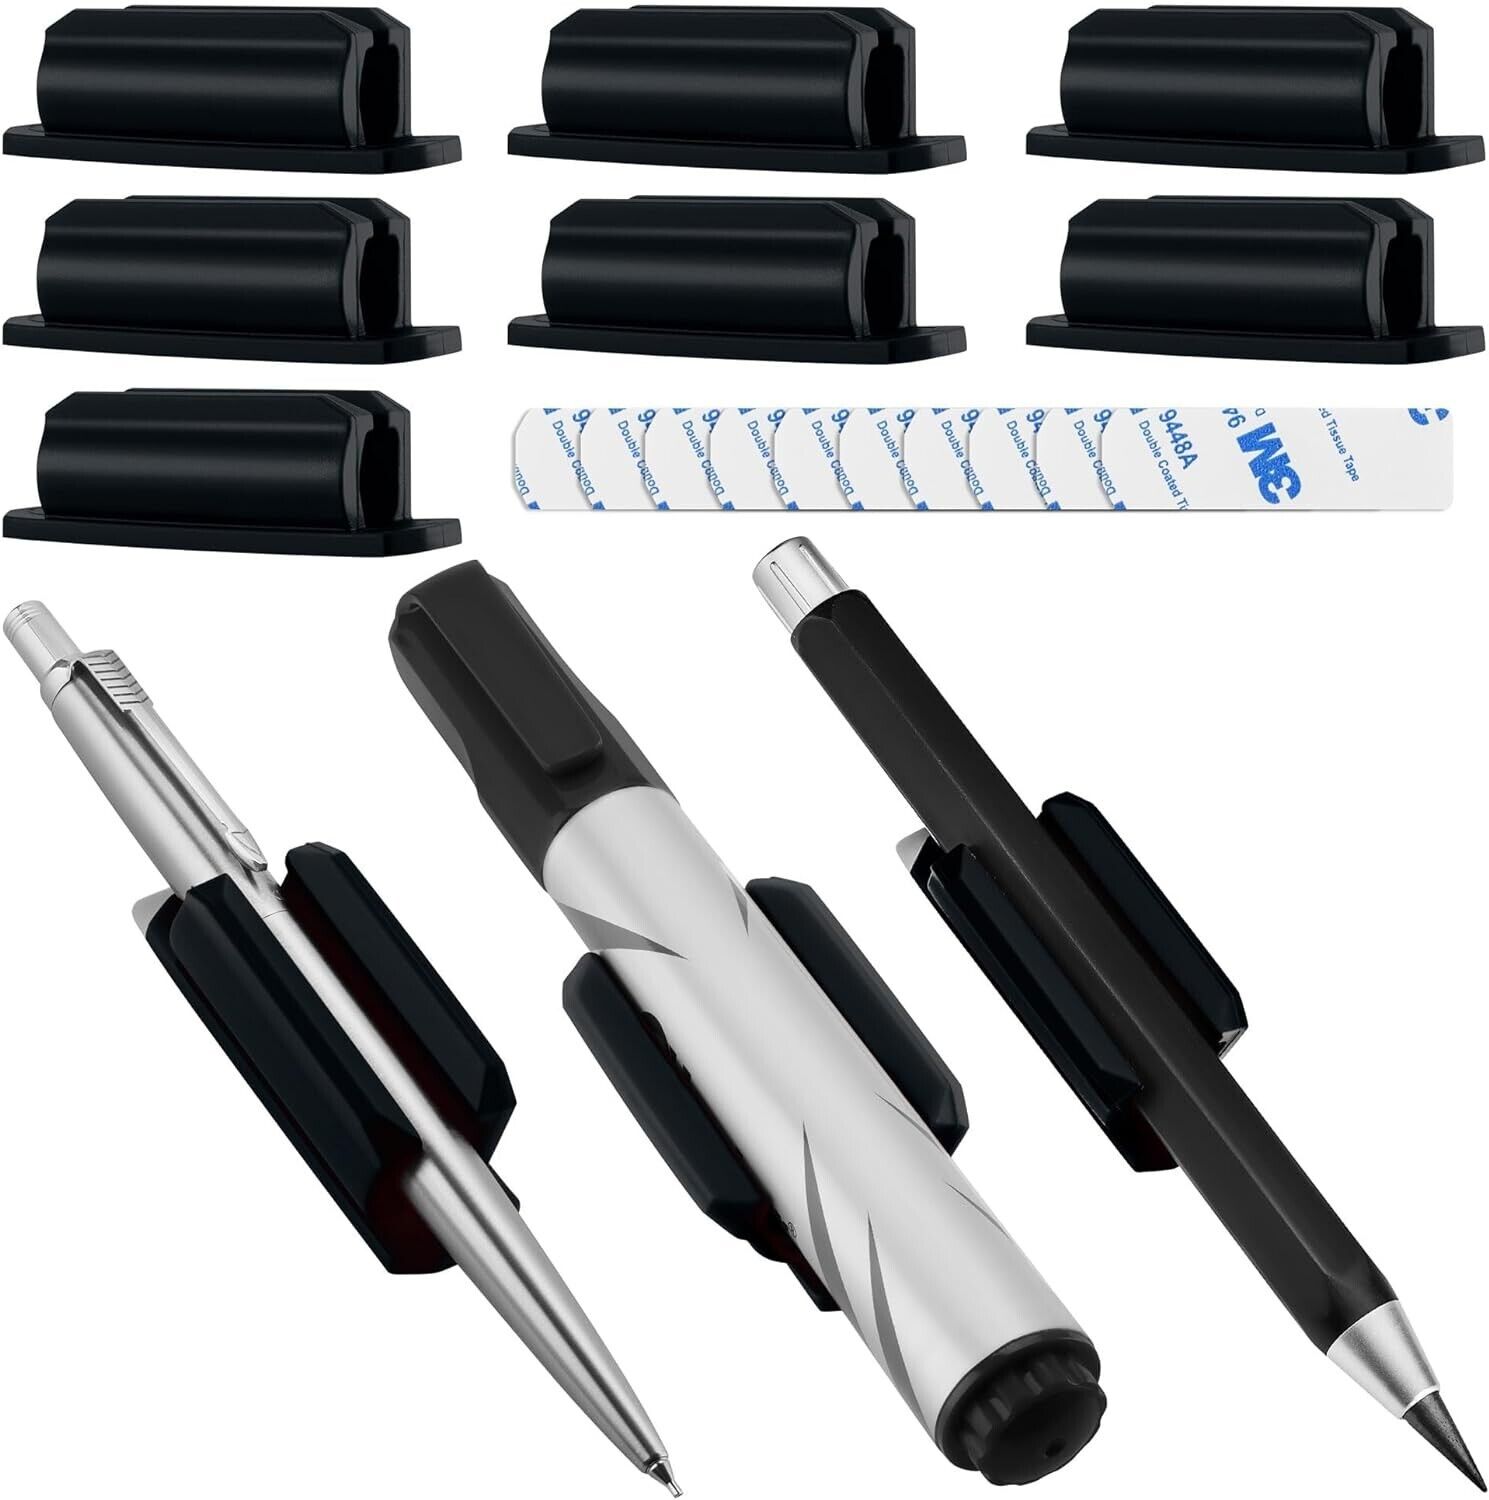 Pen Holder Set of 10, Adhesive Pen Holder for Desk or Any Surface, Pencil Holder